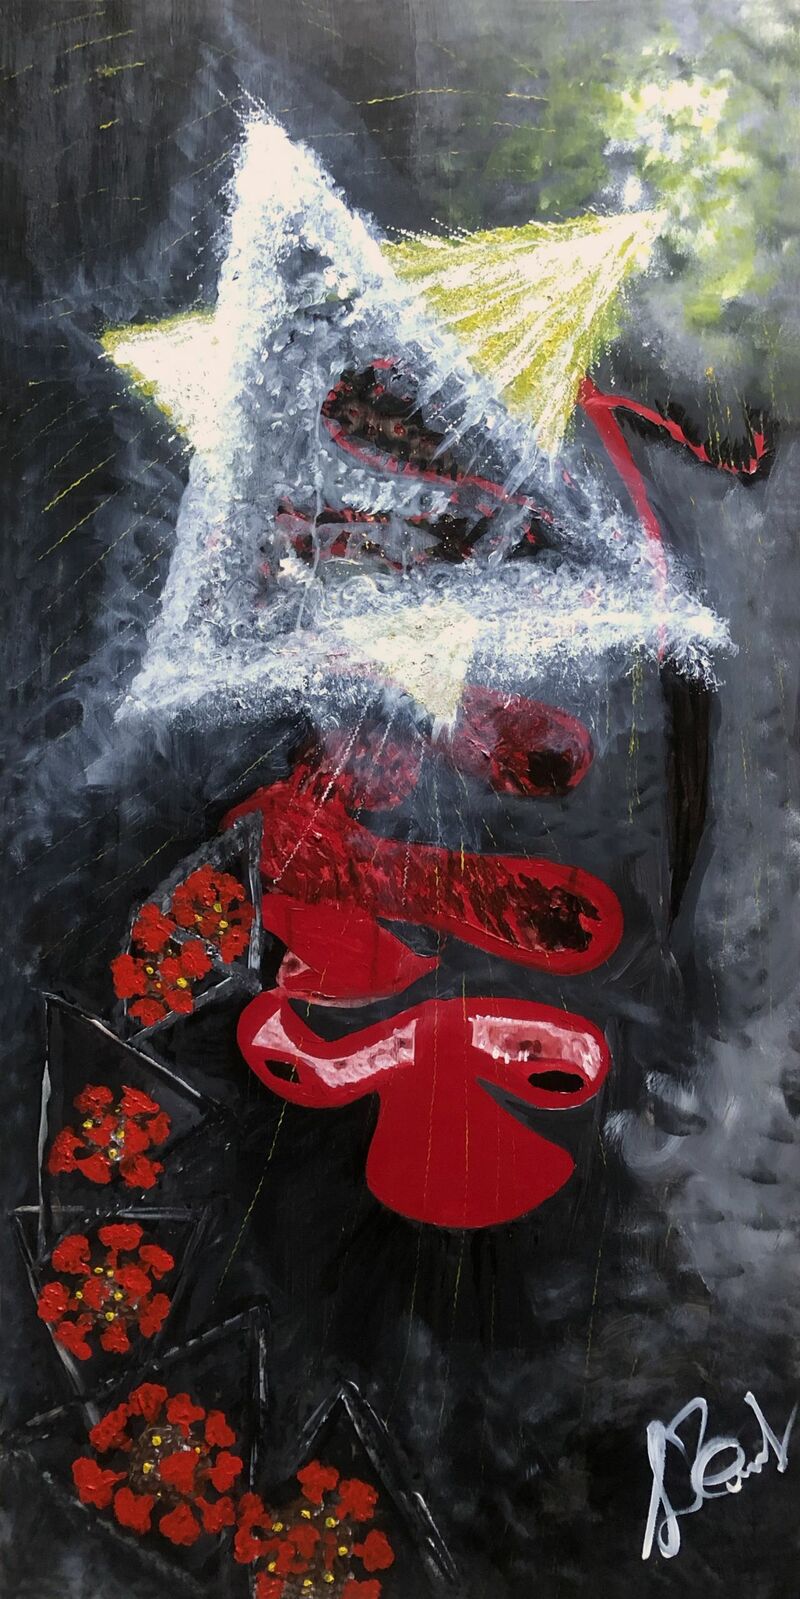 THE FINAL BATTLE - a Paint by Lina Cleufe Zanforlin